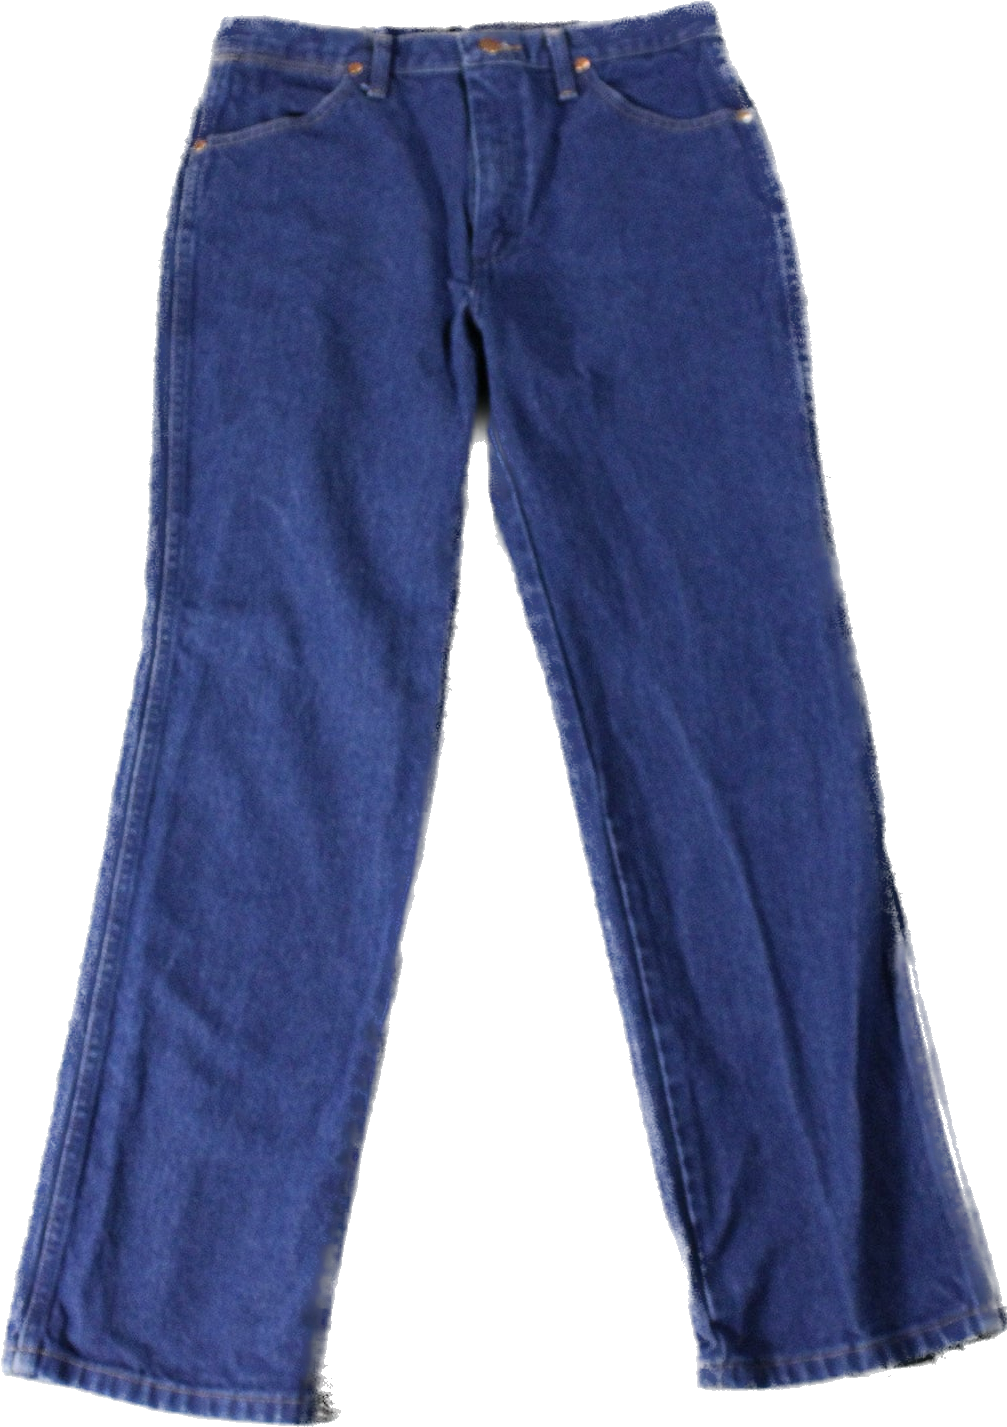 Wrangler Jeans / Vintage Blue Denim / 90s Western Workwear Clothing / Cowboy Trousers